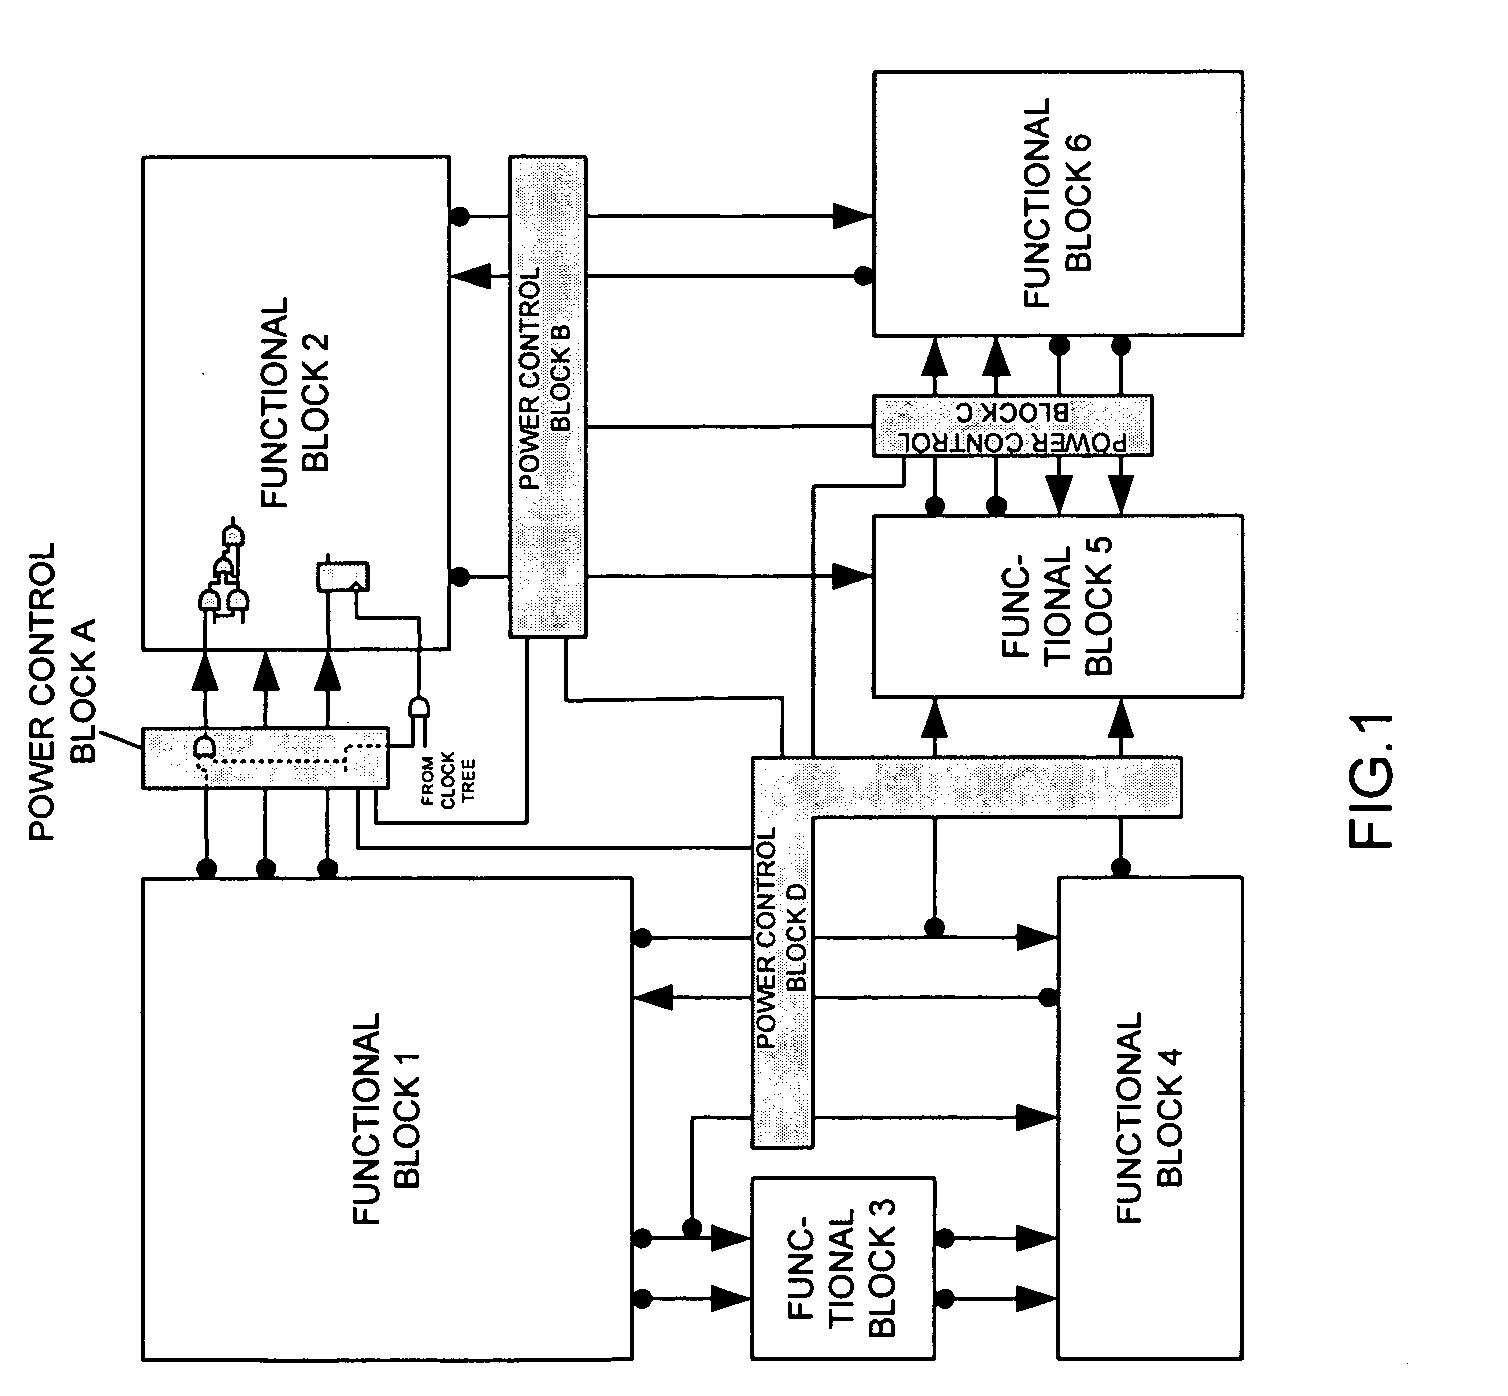 Integrated circuit with autonomous power management